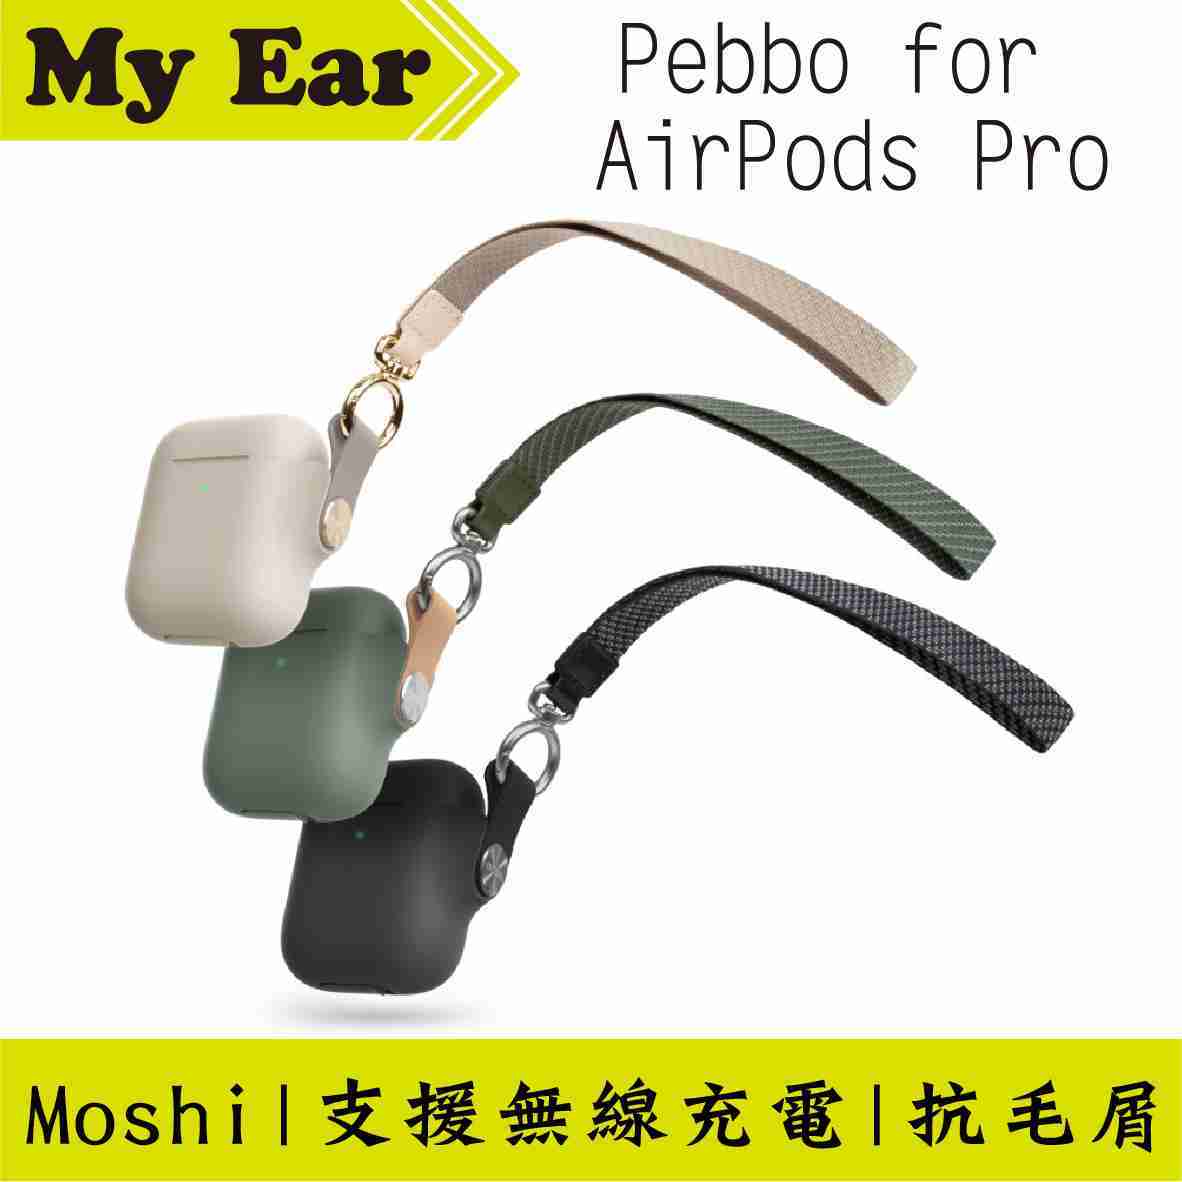 Moshi Pebbo for AirPods Pro 耳機充電盒保護套 | My Ear 耳機專門店